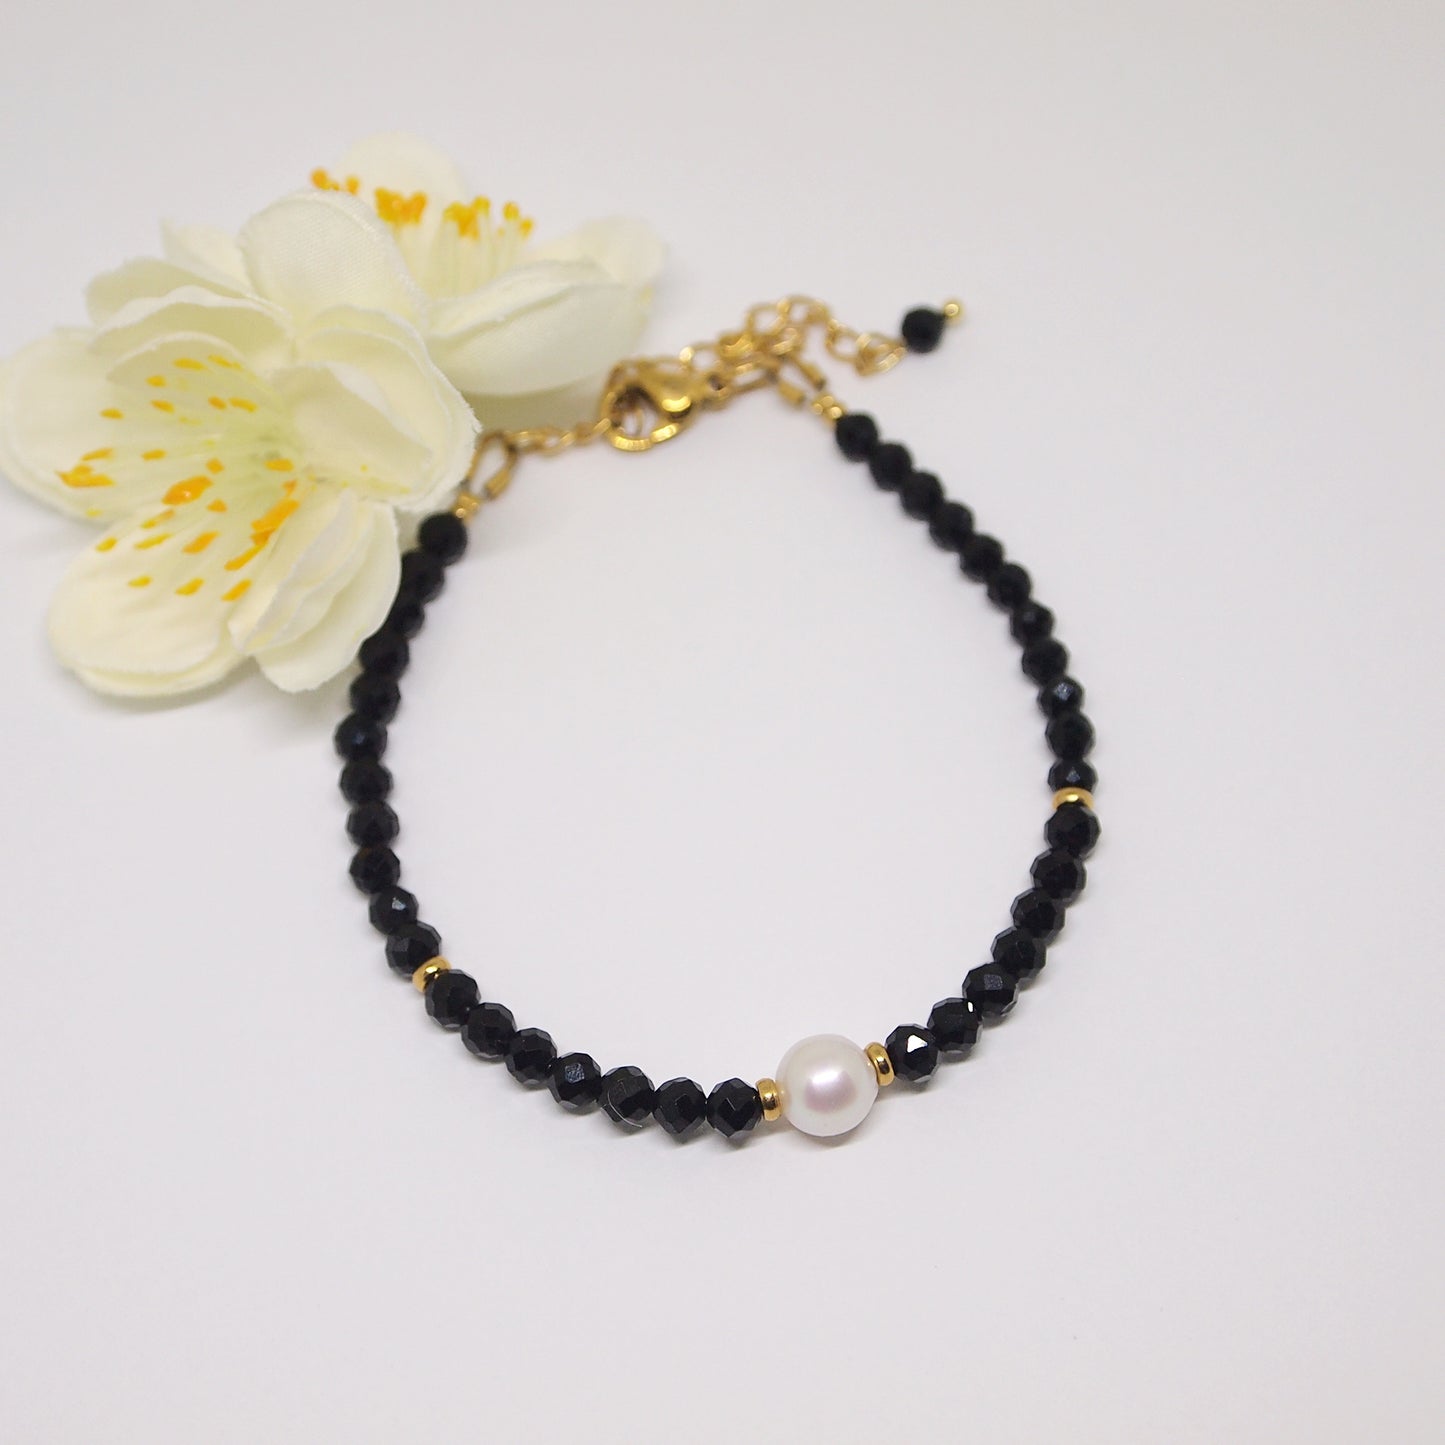 black tourmaline bracelet for woman, sliding bead closure